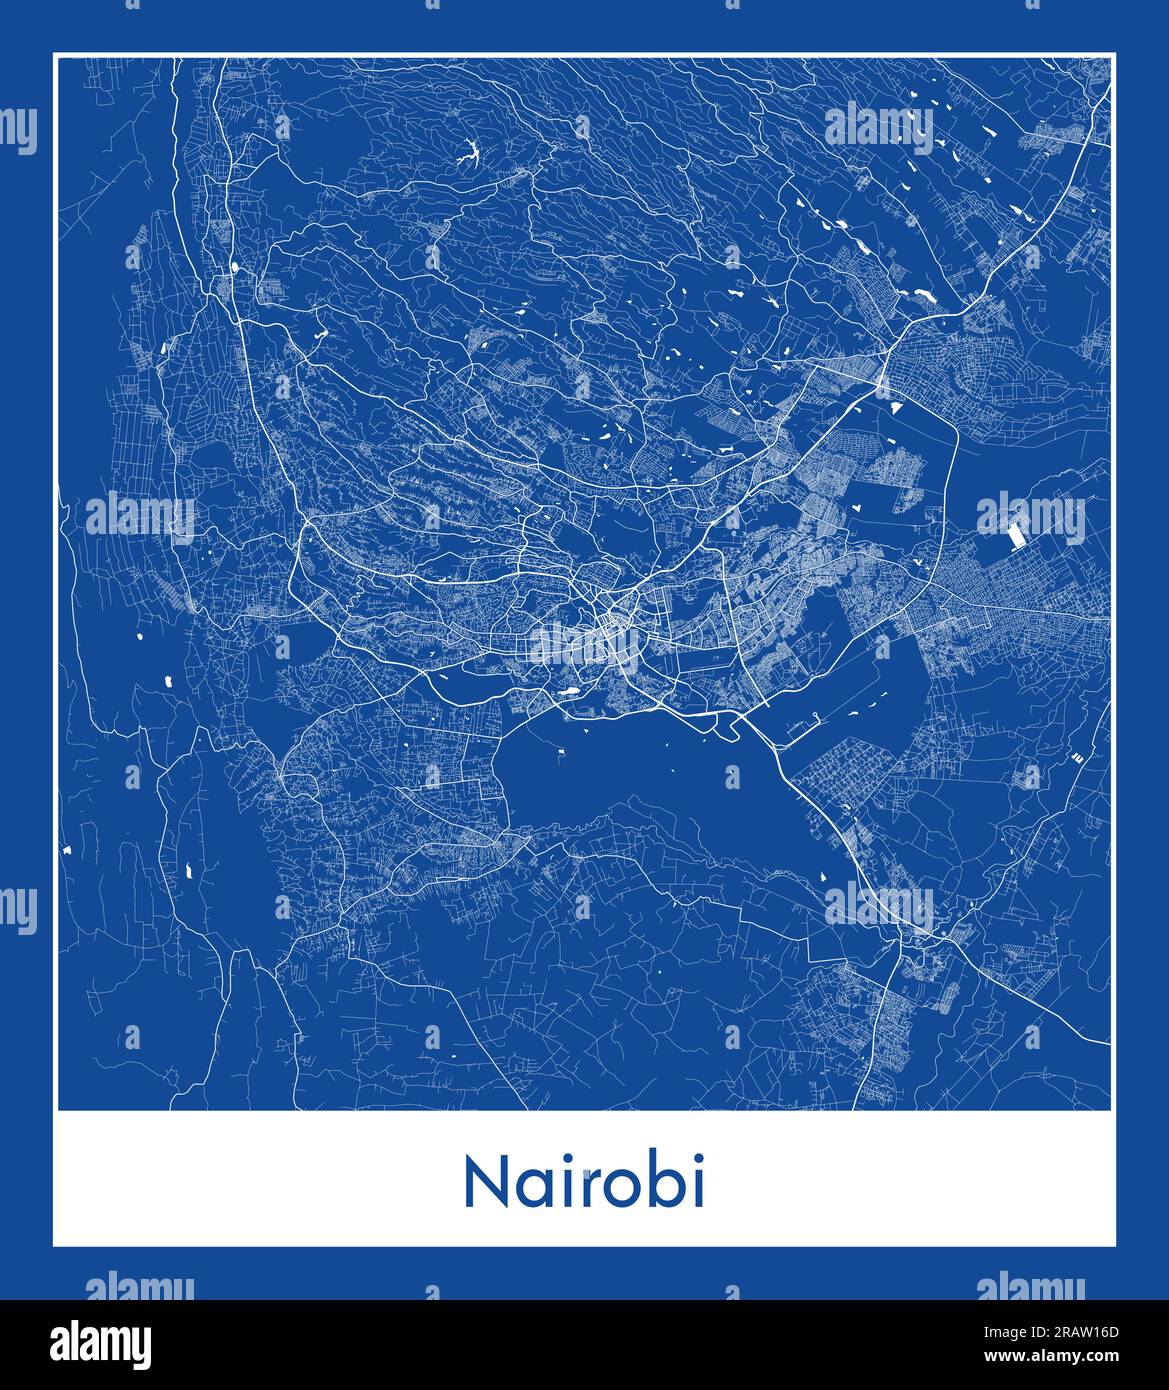 Nairobi Kenya Africa City map blue print vector illustration Stock Vector